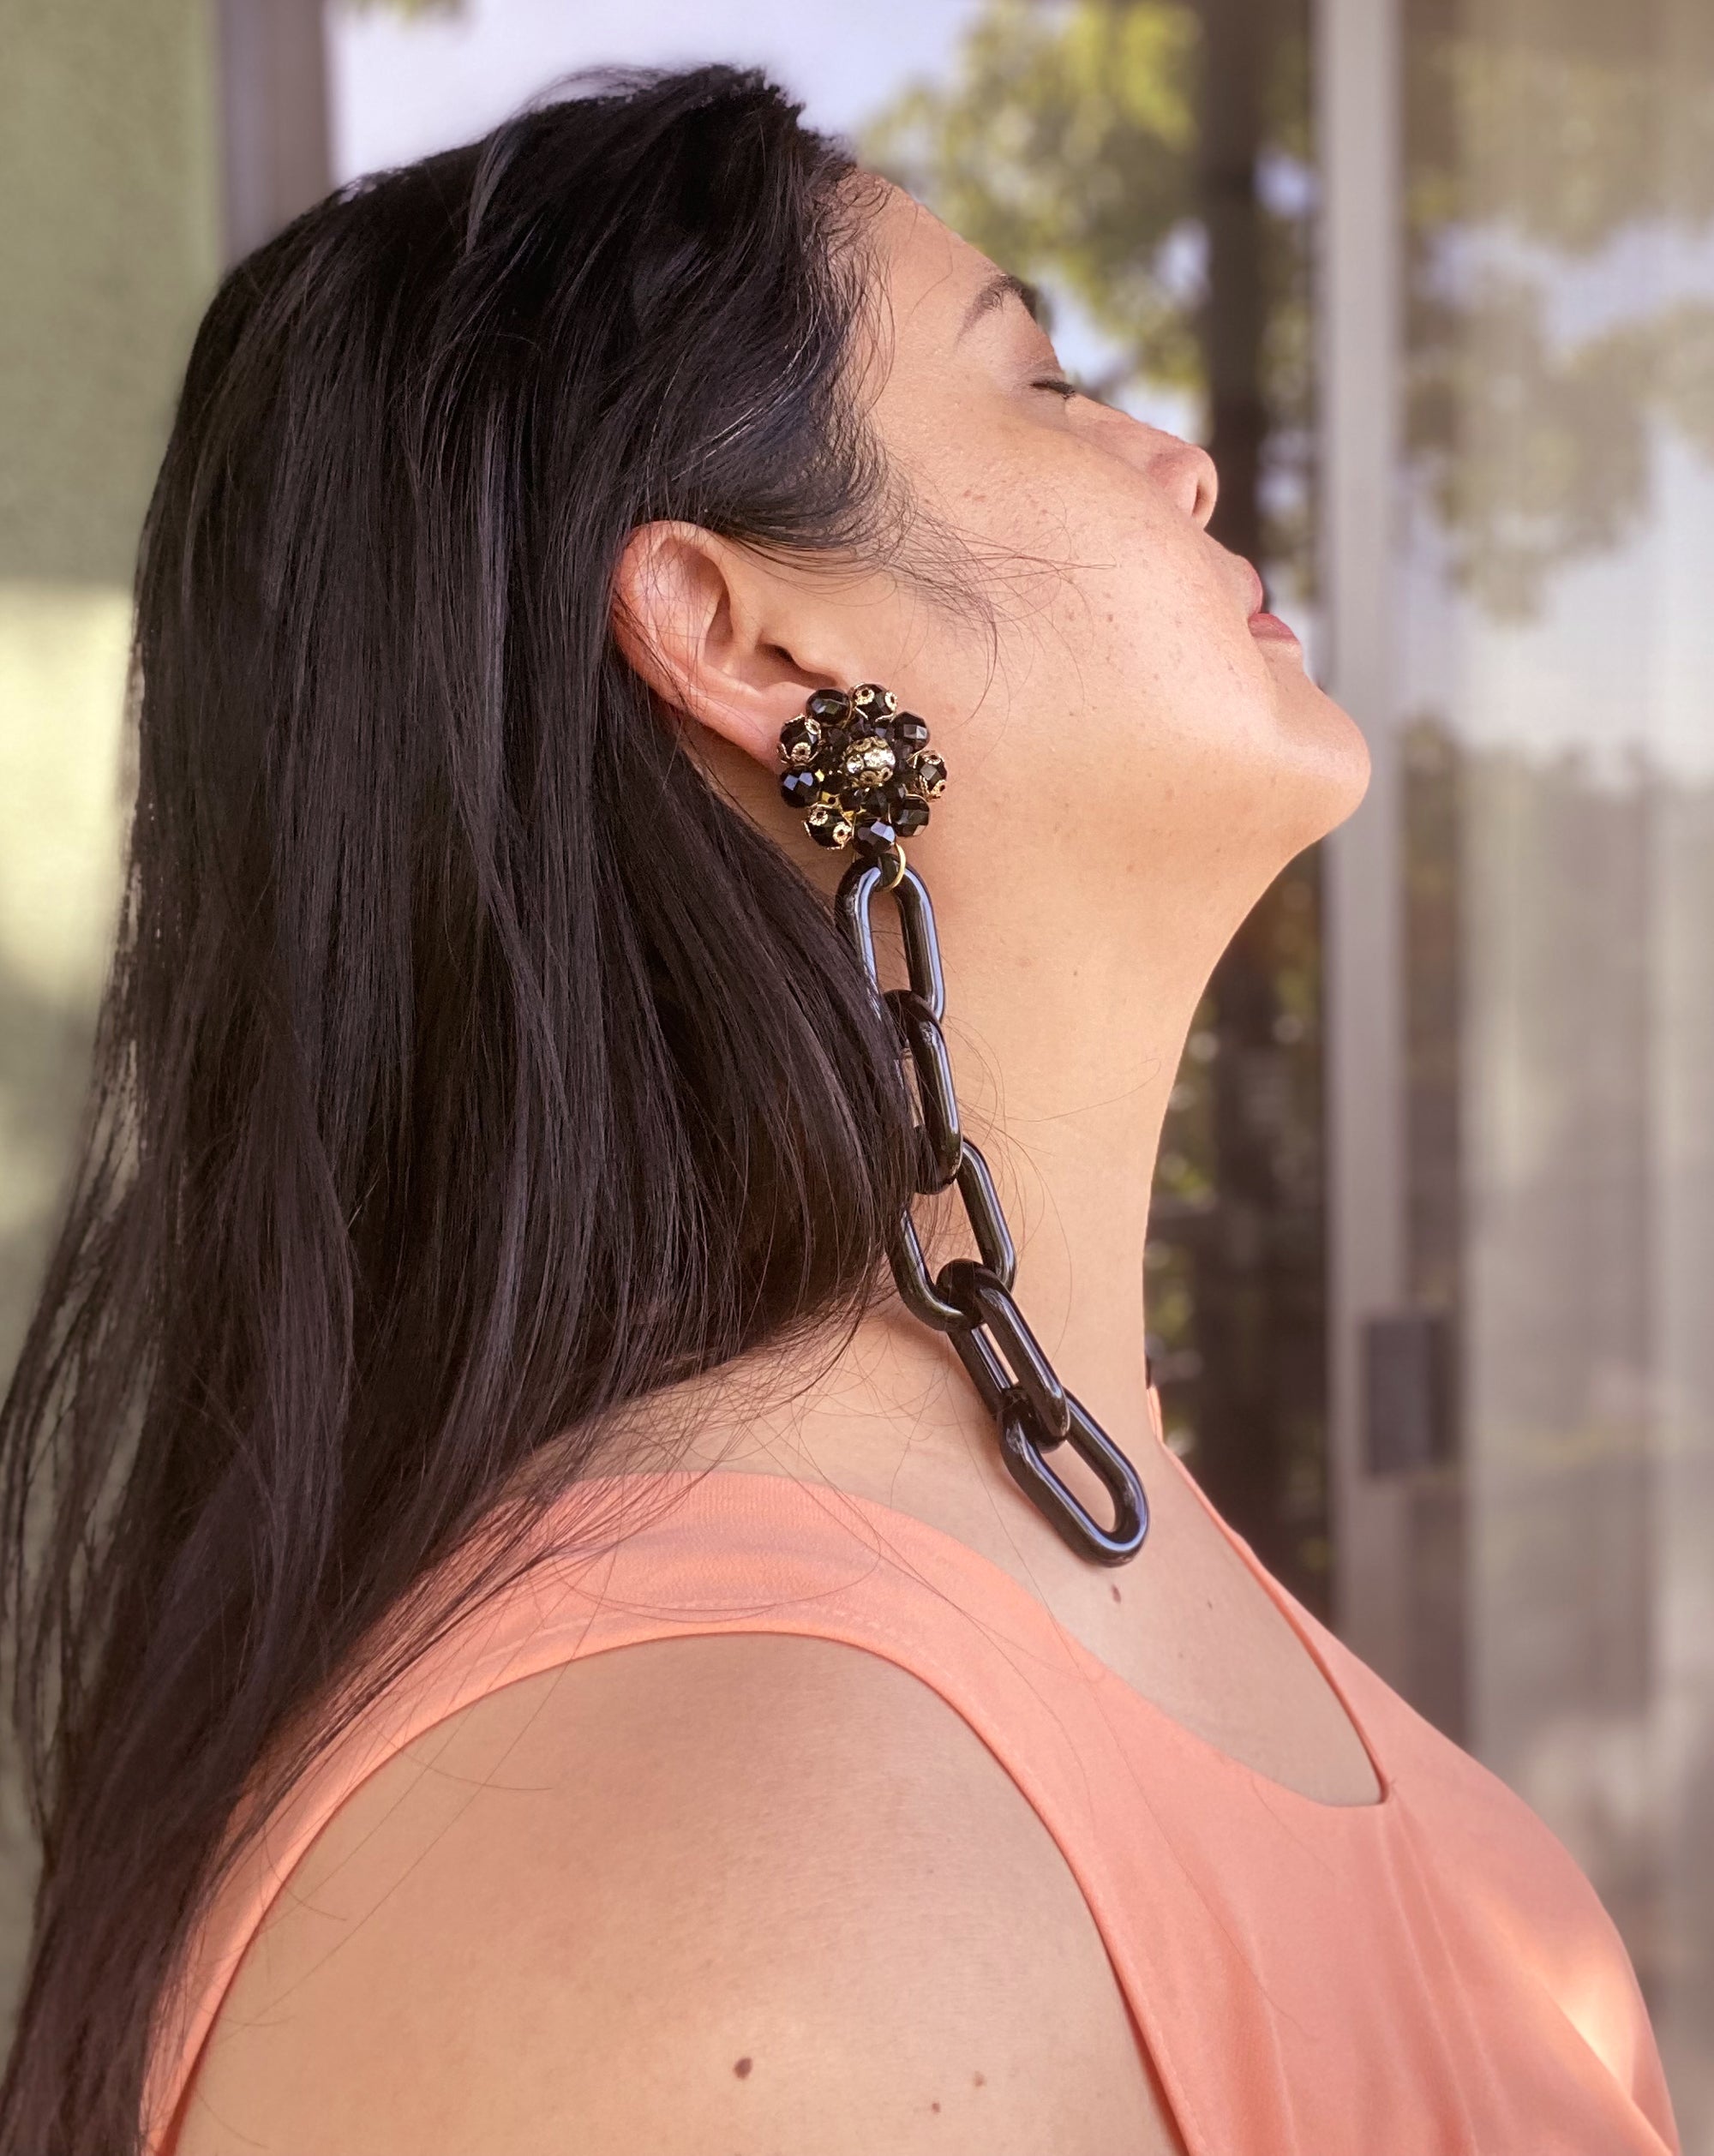 Jenny Dayco wearing black glass cluster earrings